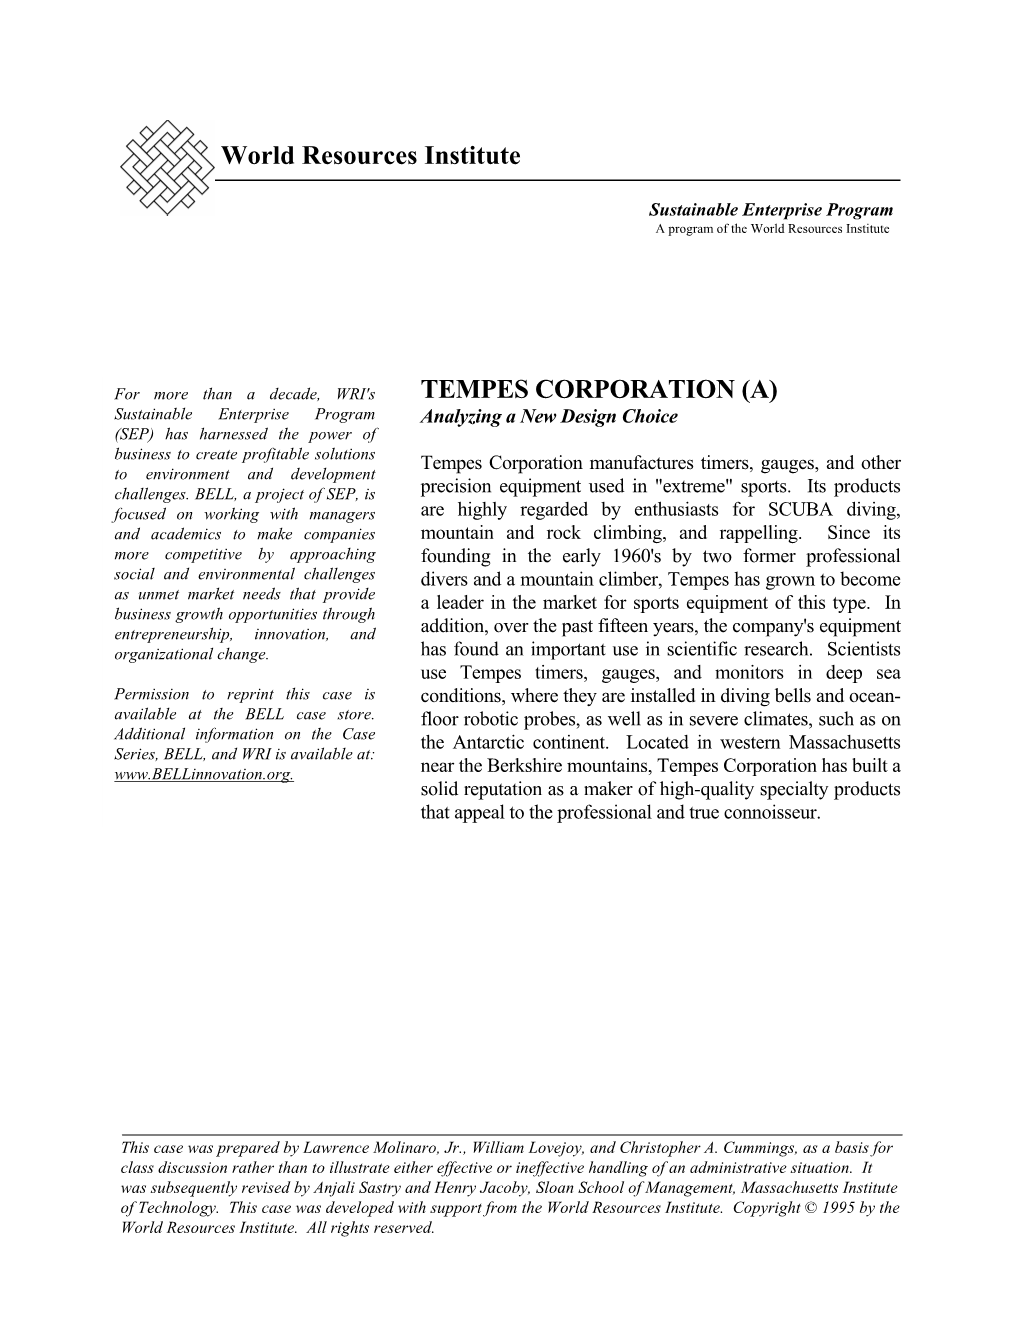 Tempes Corporation (A)